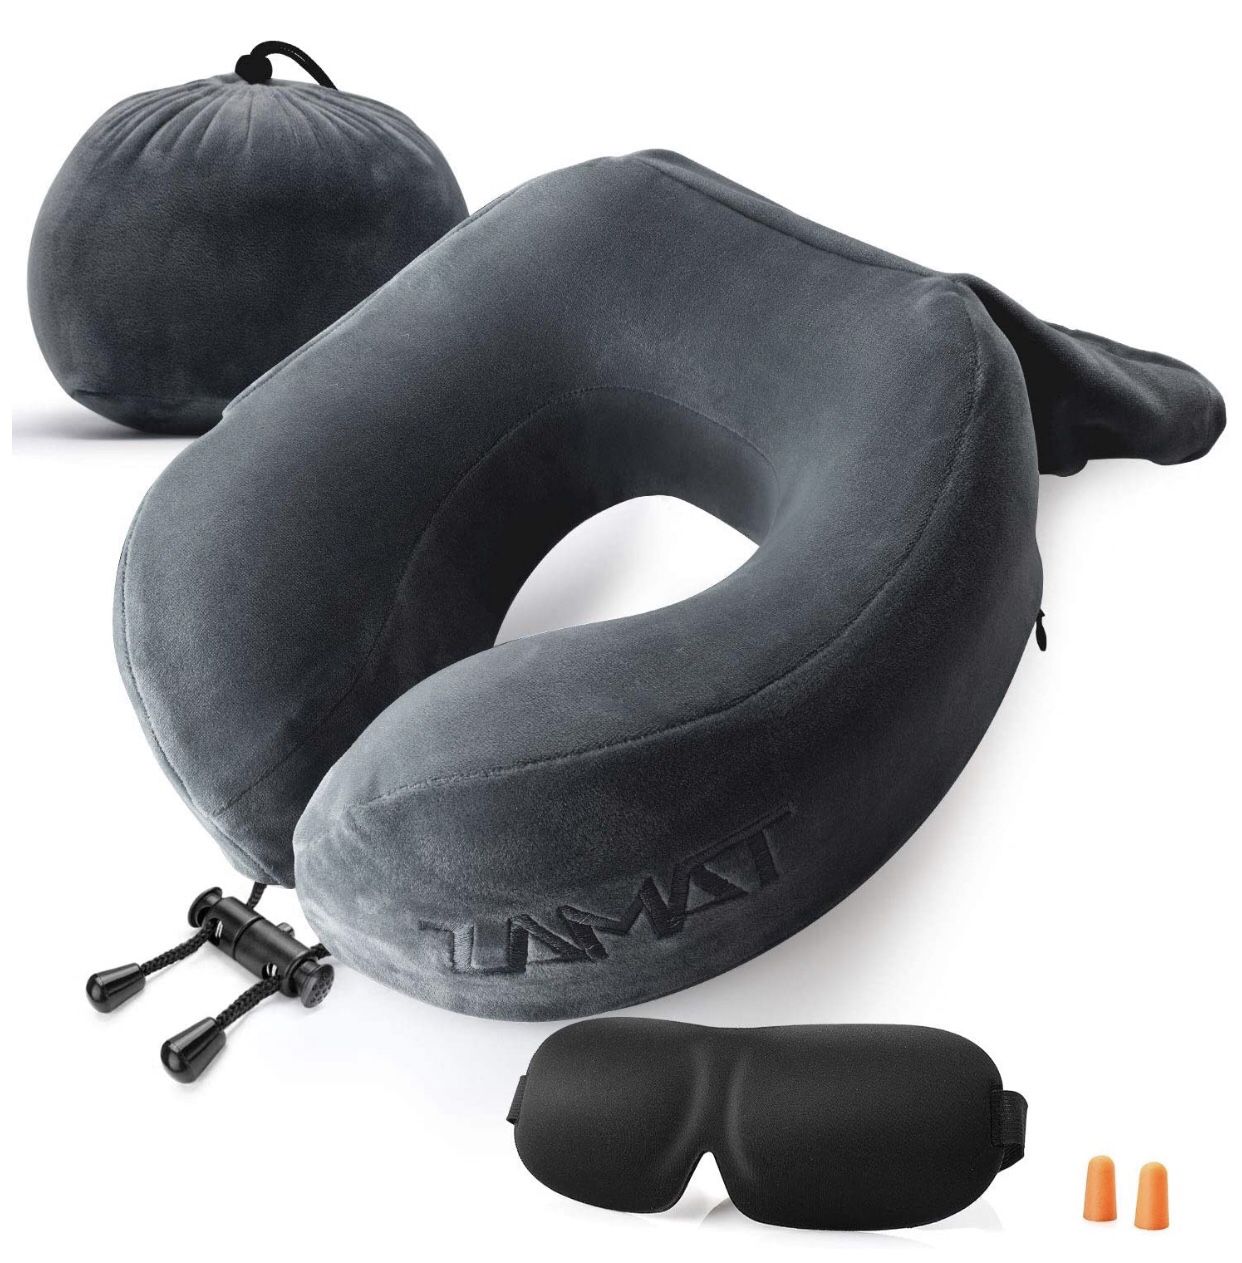 ZAMAT Breathable & Comfortable Memory Foam Travel Neck Pillow, U-Shaped Adjustable Airplane Car Flight Pillow, 360-Degree Head Support, Machine Washa